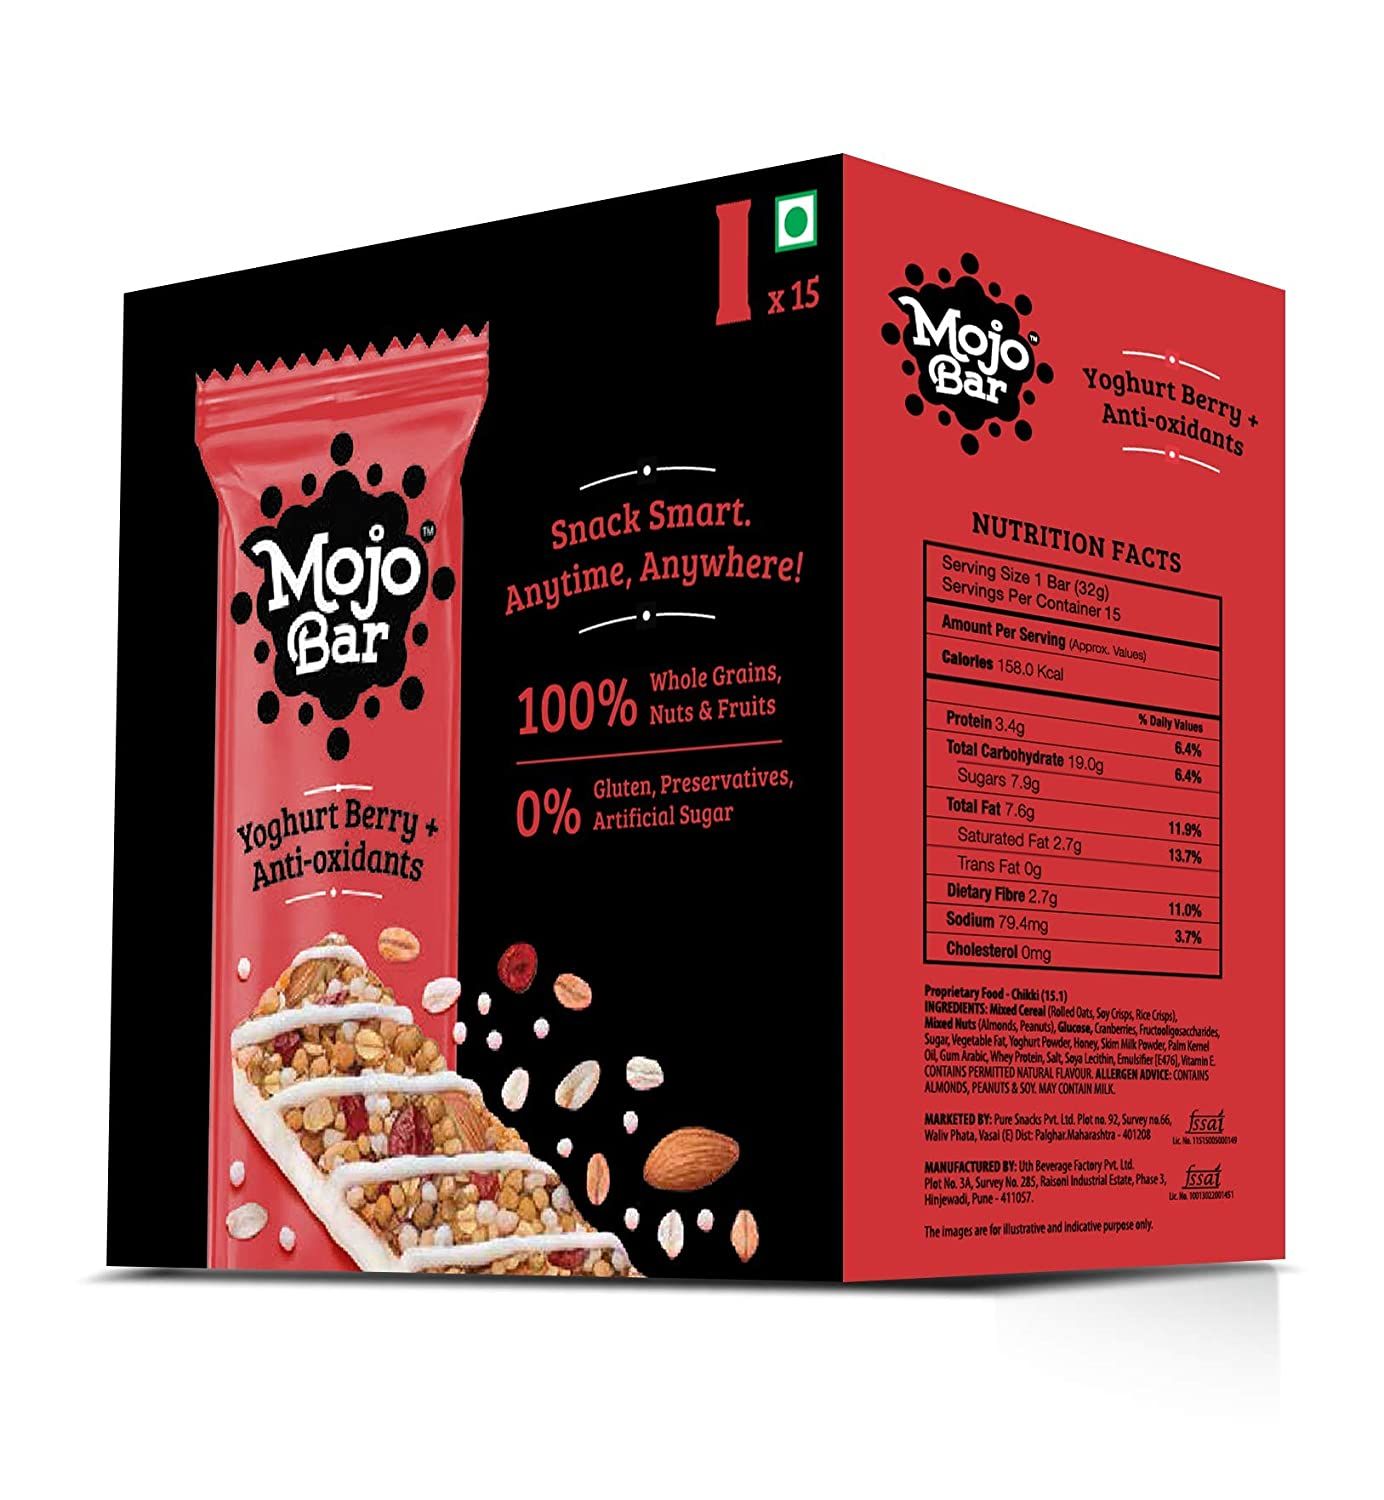 Mojo Bar Yoghurt Berry Anti Oxidant Image